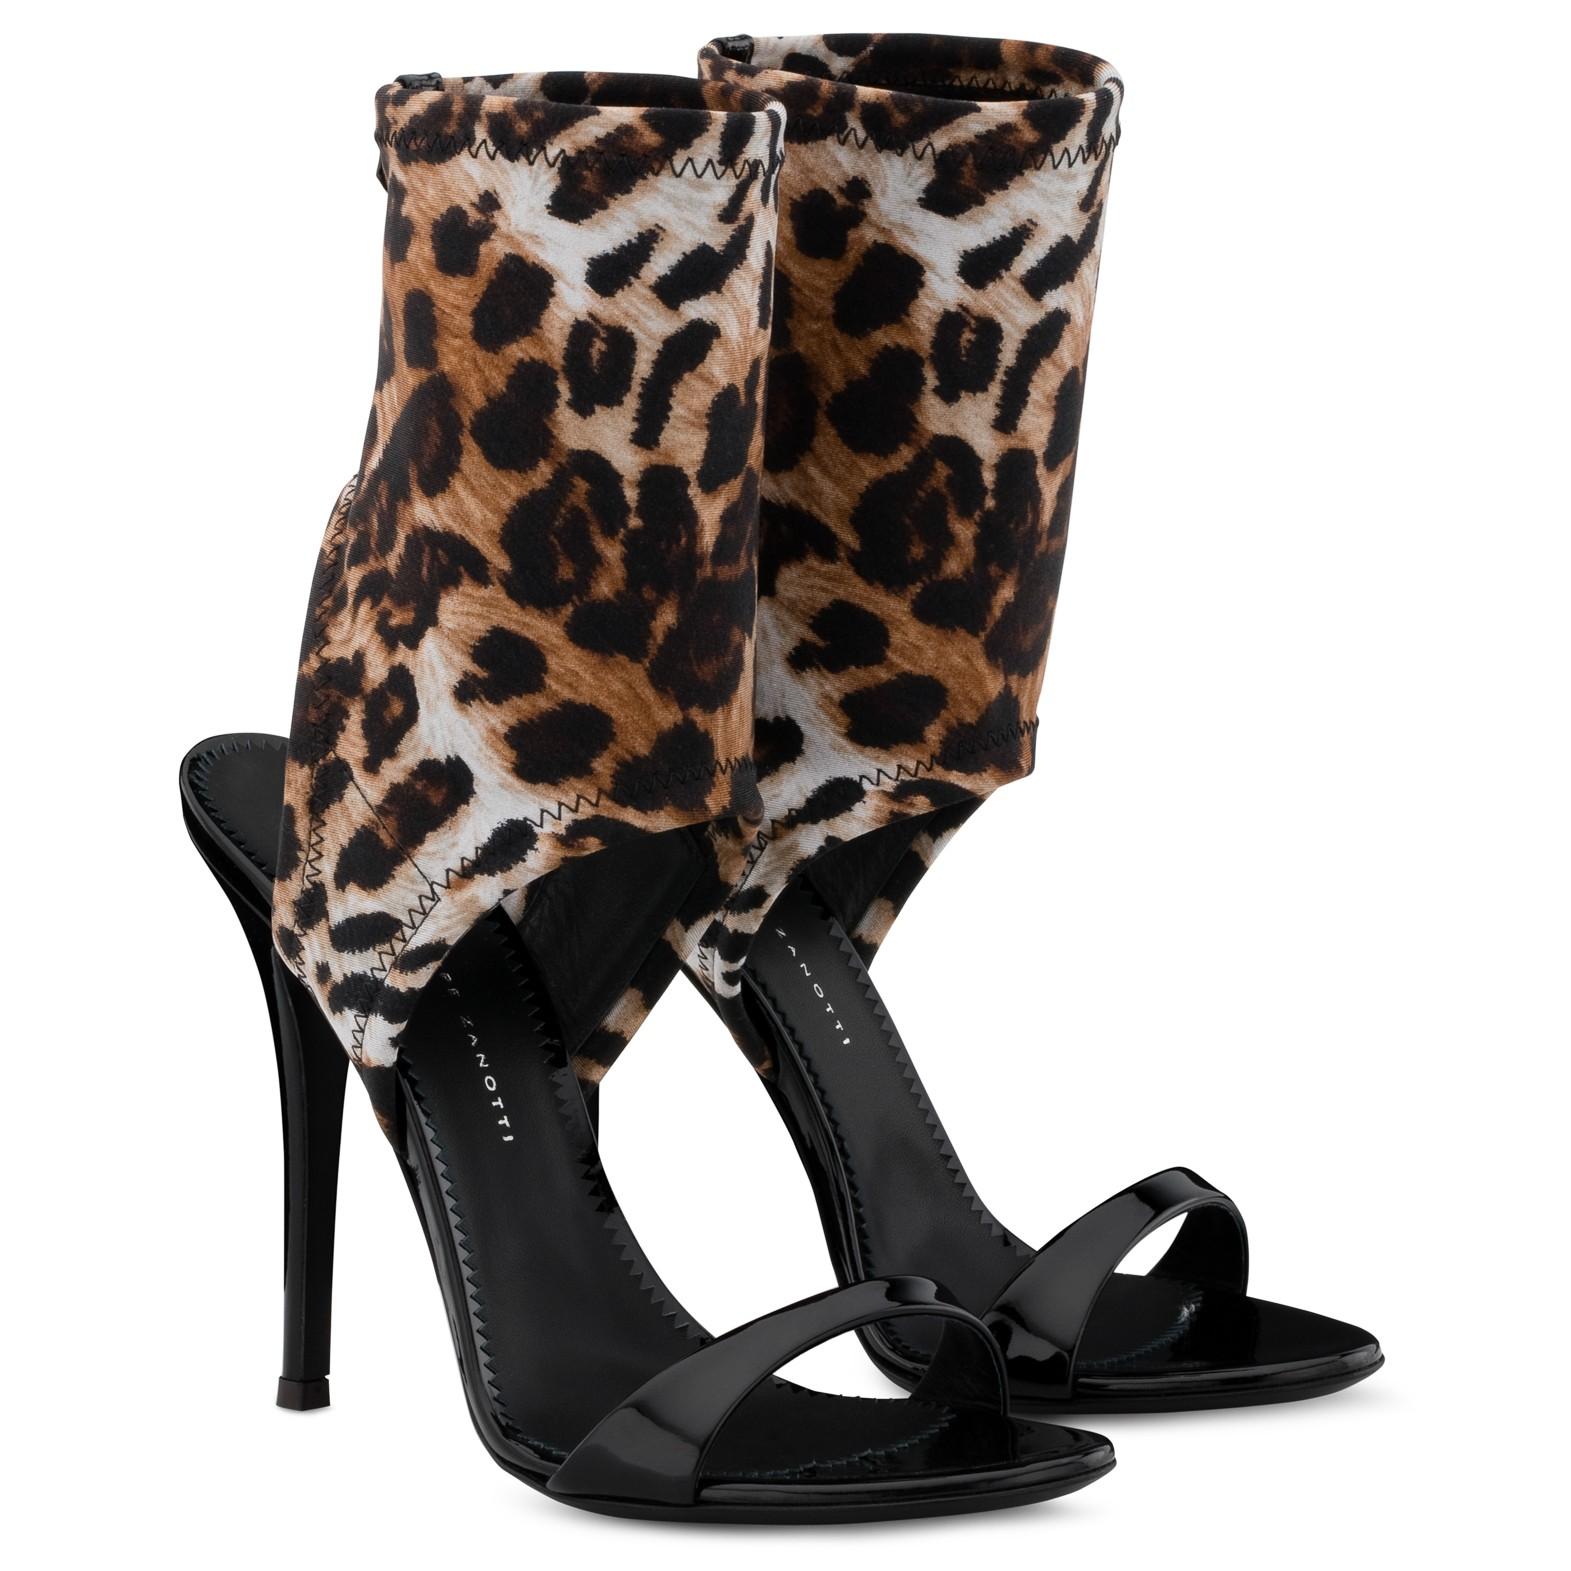 Black Giuseppe Zanotti NEW Leopard Neoprene Sock Evening Boots Booties Heels in Box